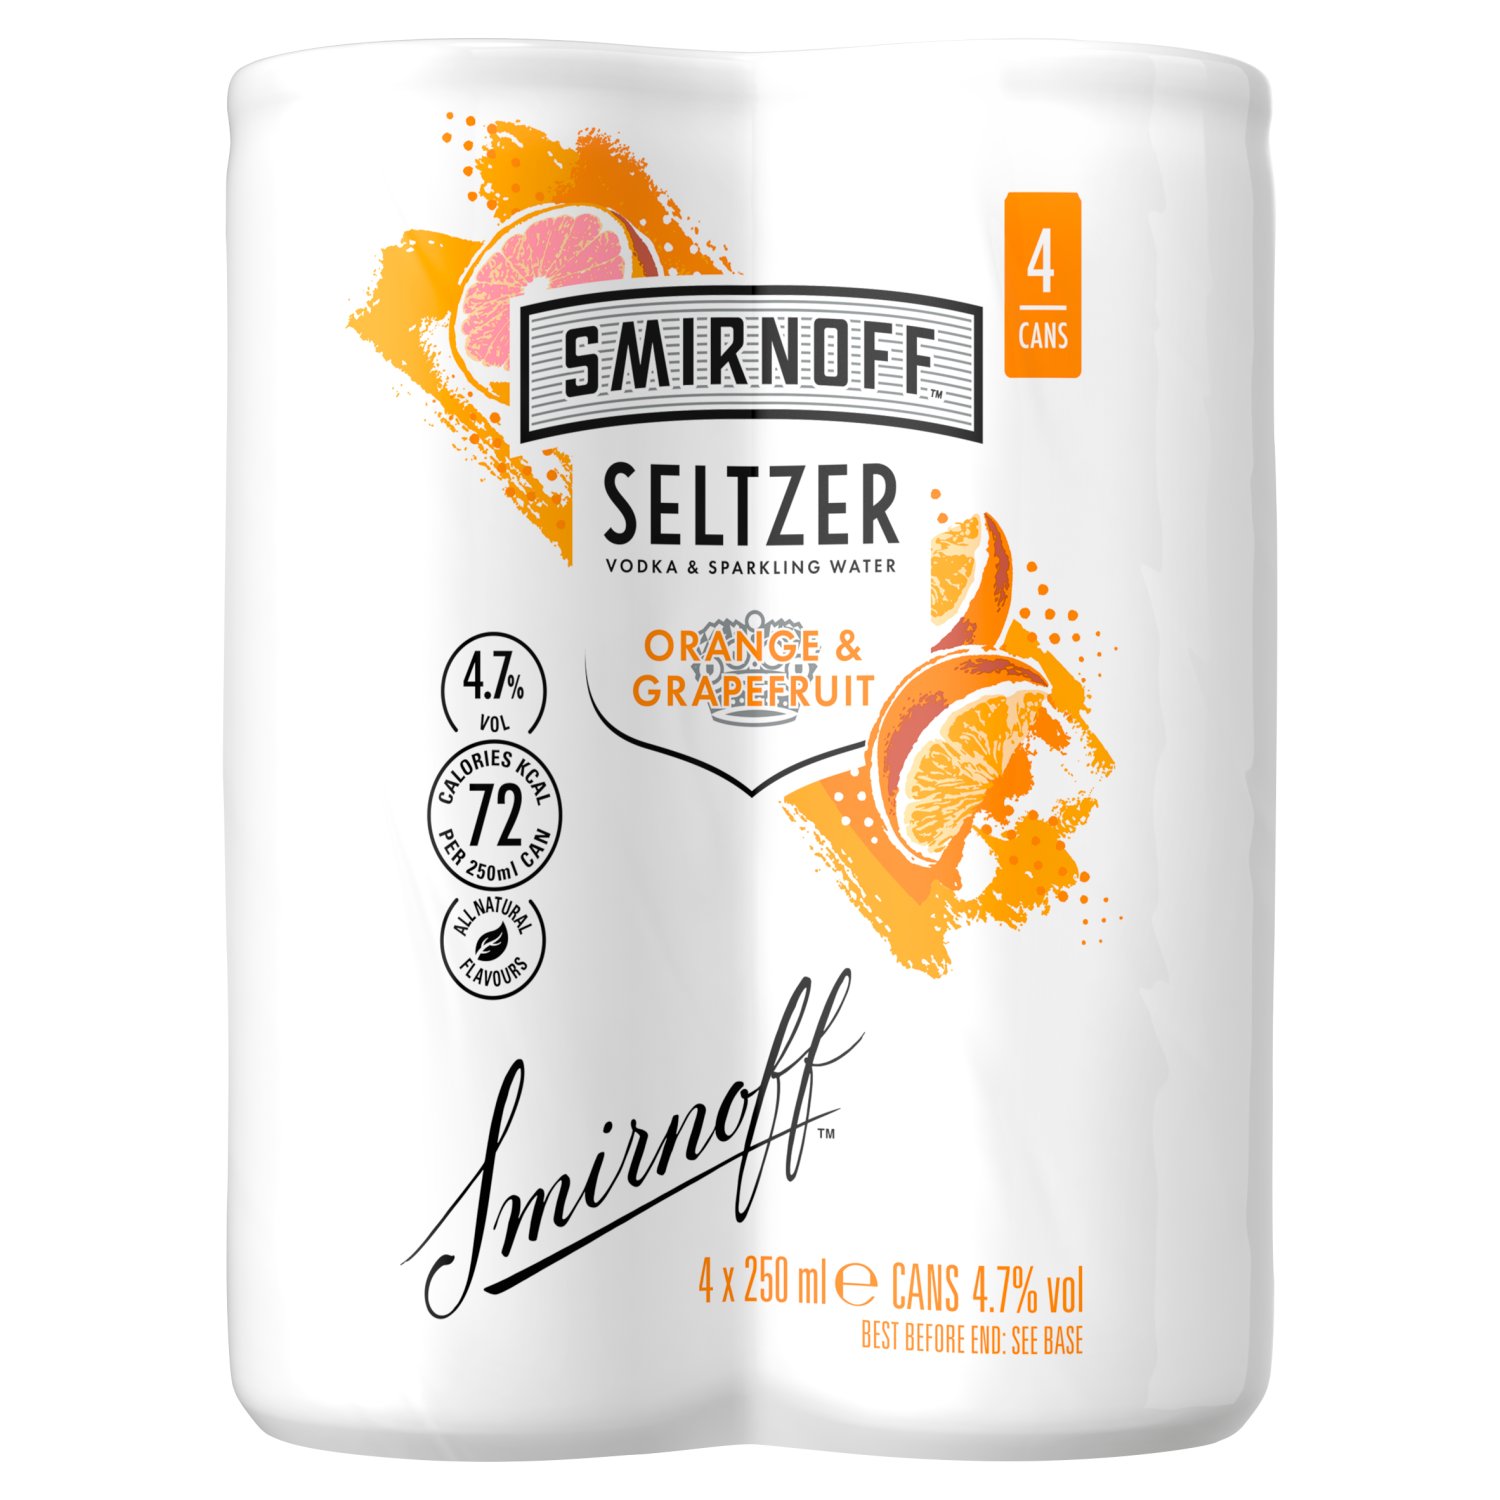 Smirnoff Seltzer Orange & Grapefruit Can 4 Pack (250 ml)